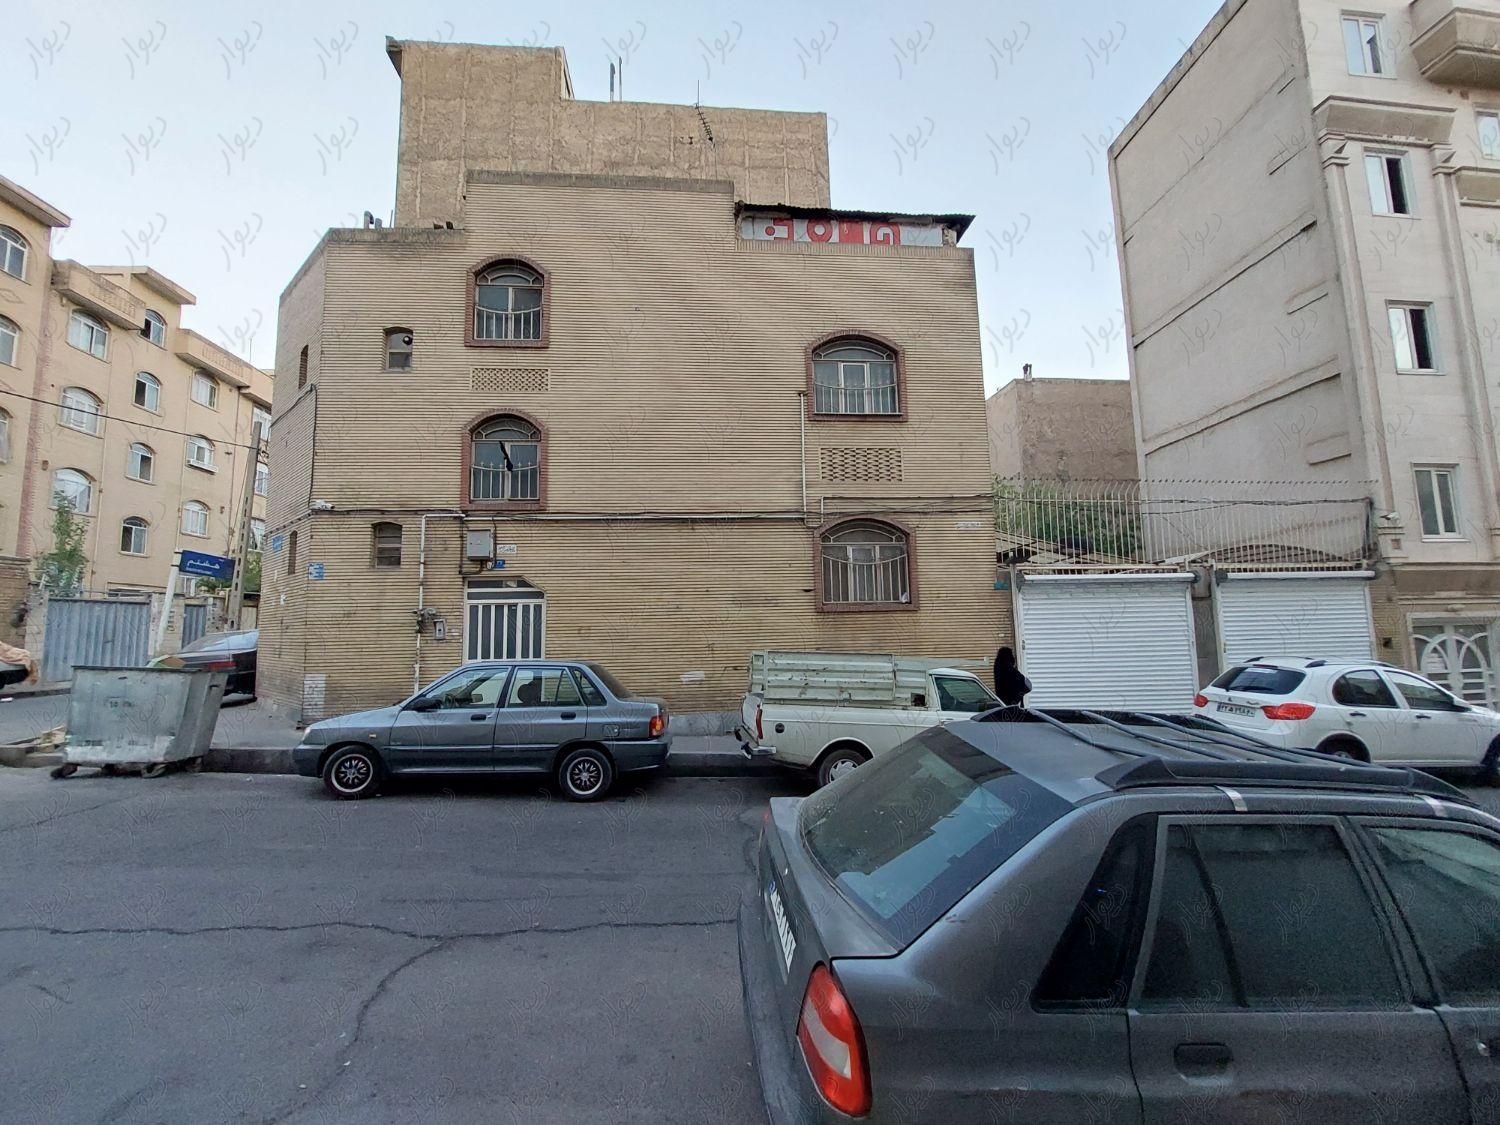 خانه کلنگی ۱۲۰ متری|فروش زمین و کلنگی|تهران, مشیریه|دیوار